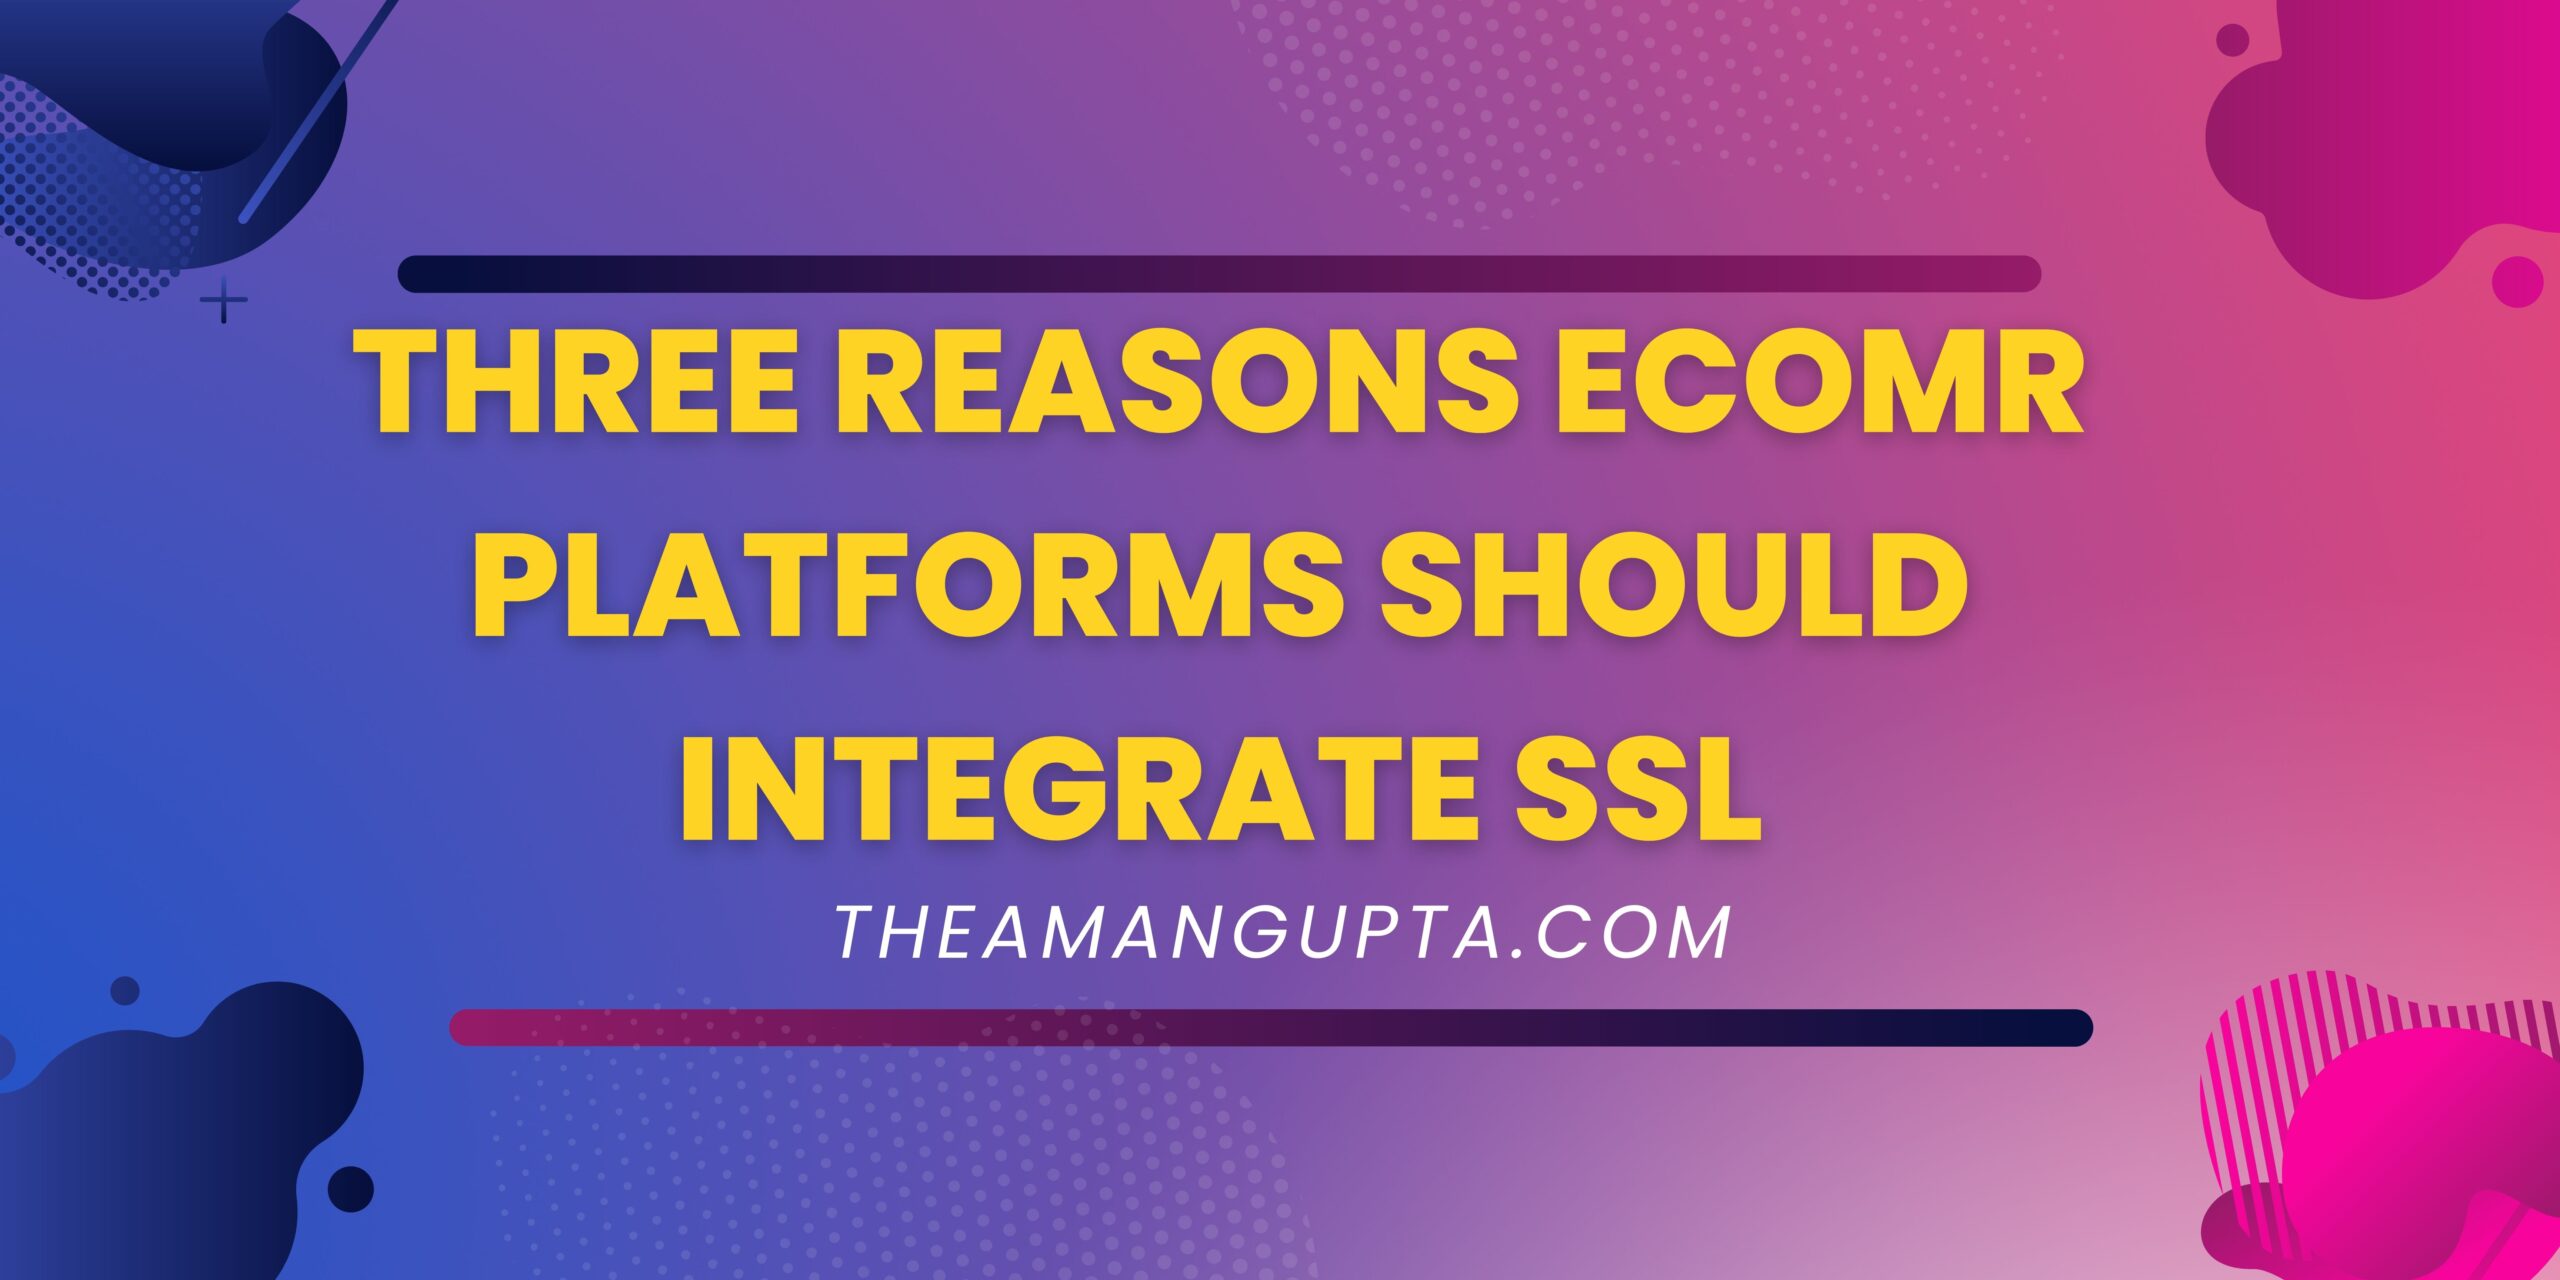 Three Reasons ECOMR Platforms Should Integrate SSL|Integrate SSL|Theamangupta|Theamangupta